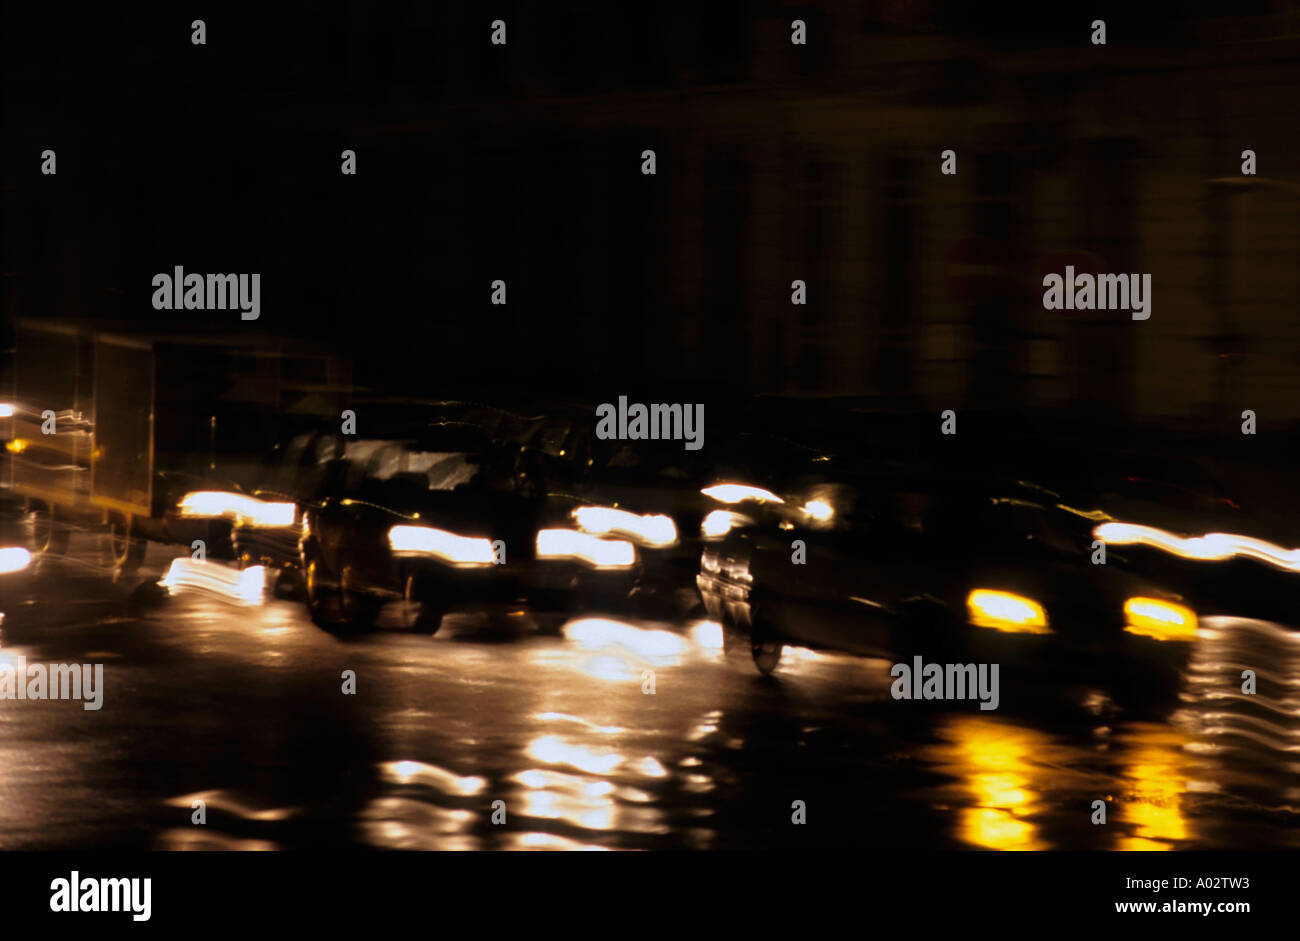 Blurred headlights car at night Stock Photo